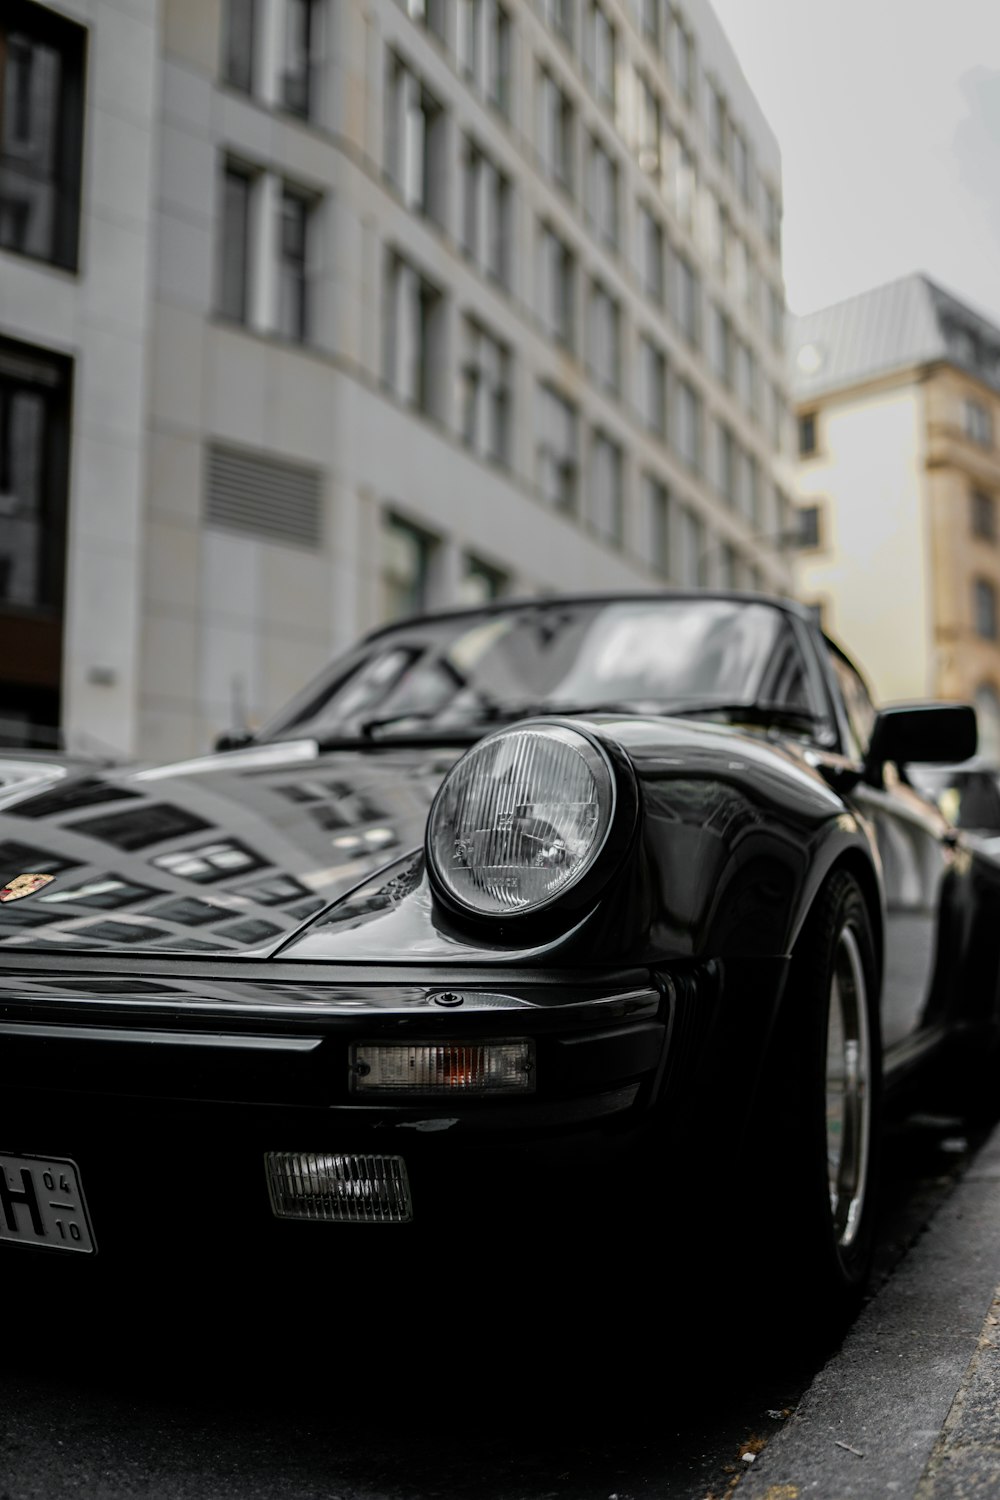 Porsche 911 preto estacionado perto do edifício durante o dia